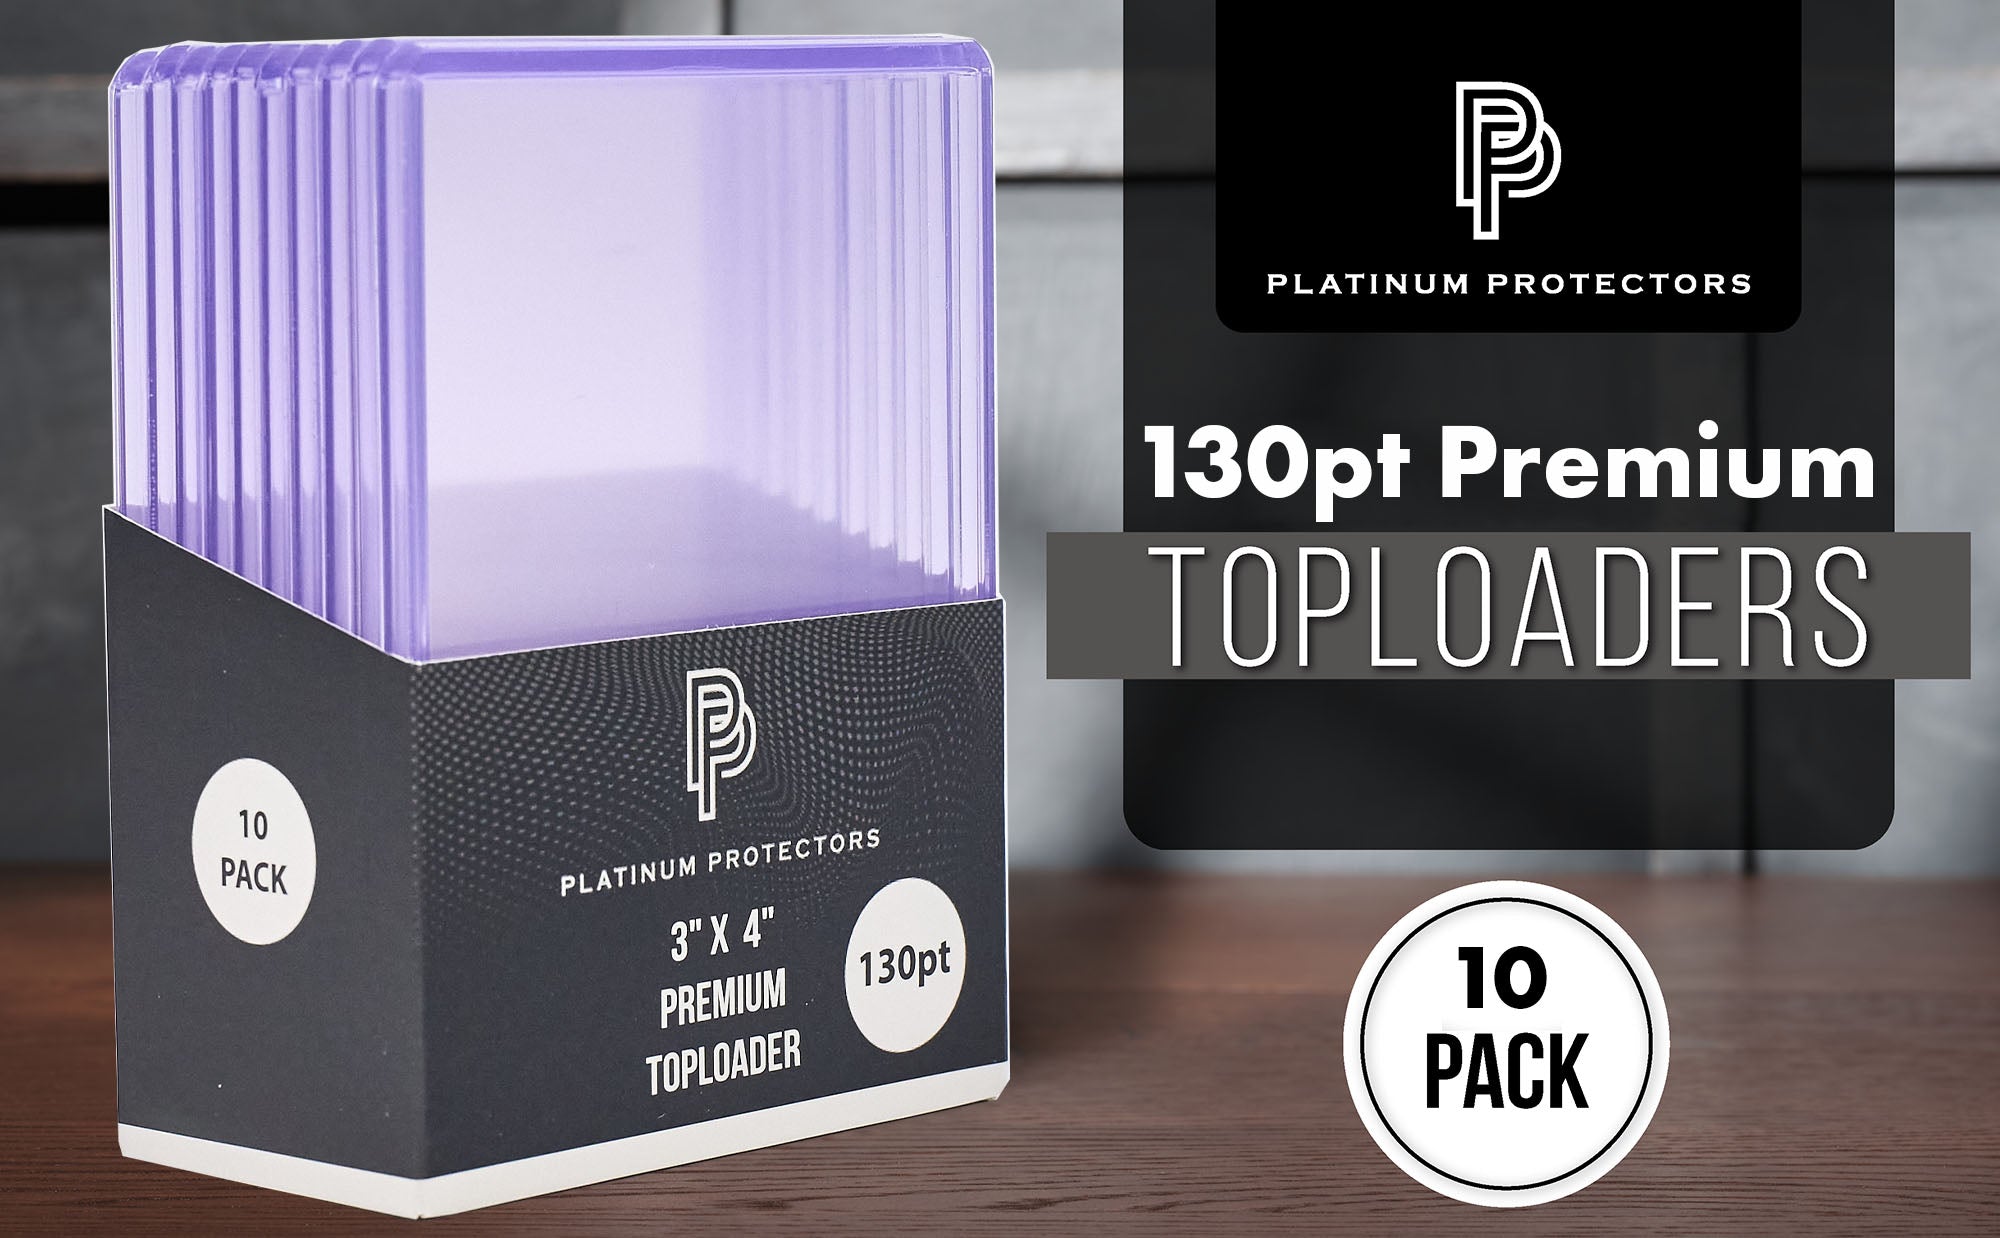 Platinum Protectors Premium Toploaders for Trading Cards - 130 pt